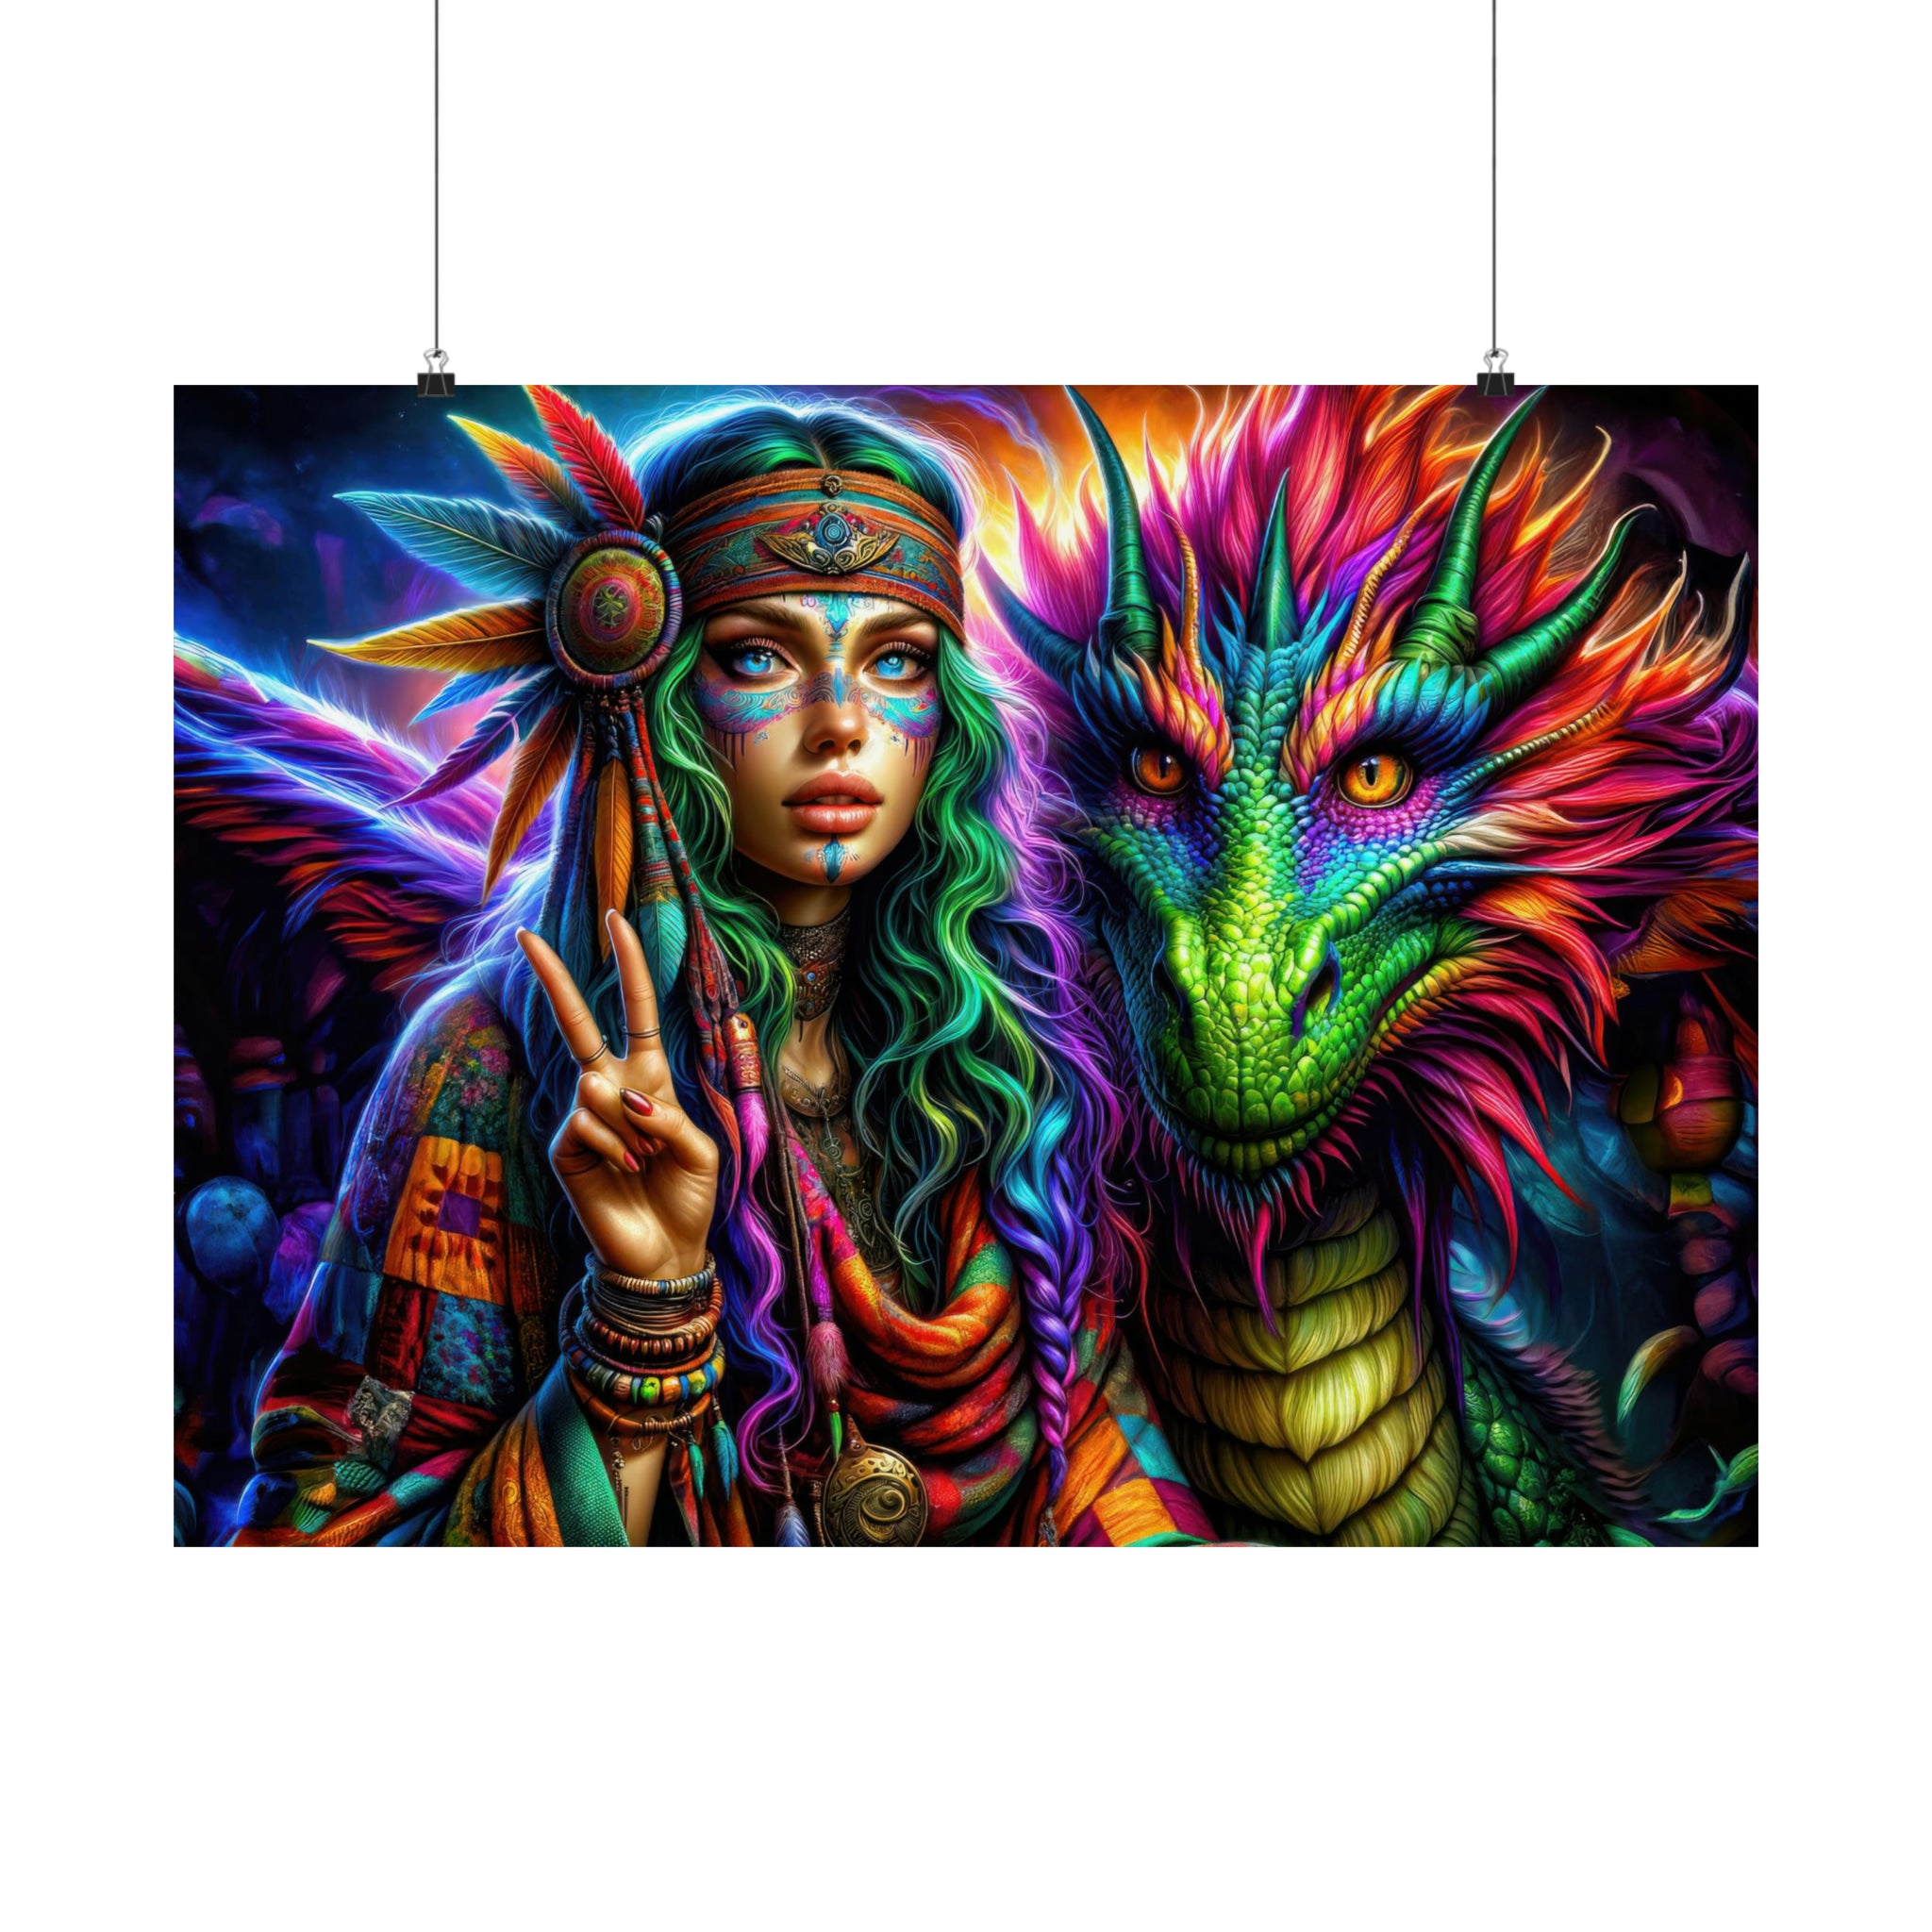 The Dragon's Bohemian Guardian Poster